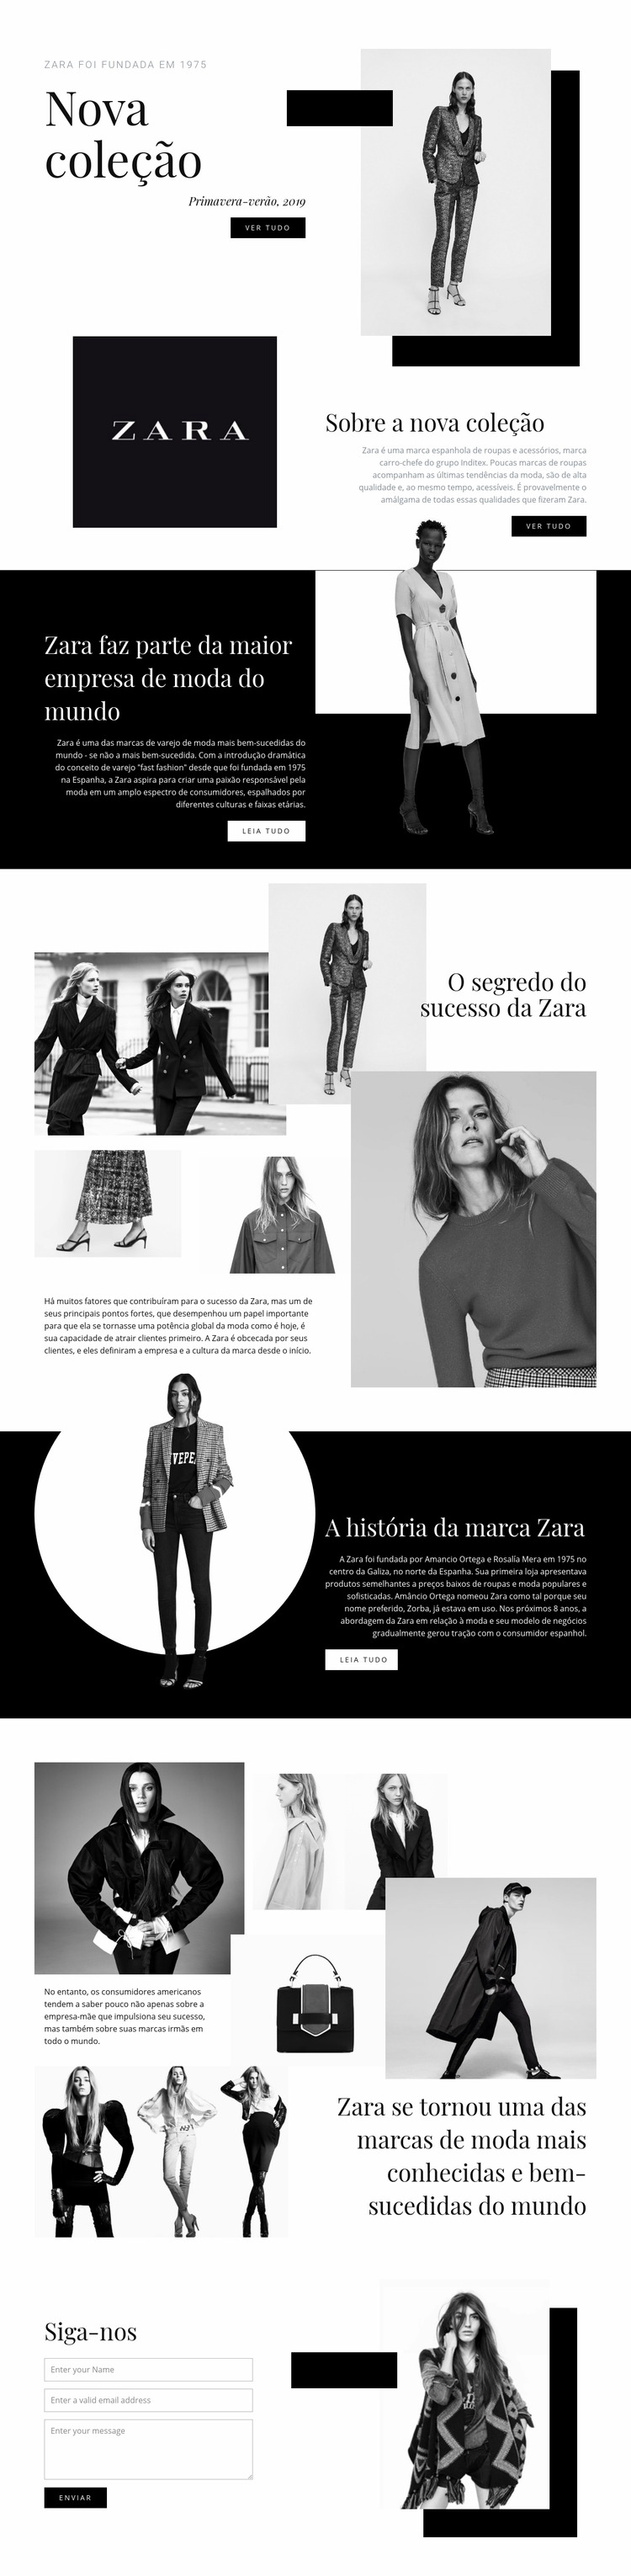 Coleção Zara Template Joomla